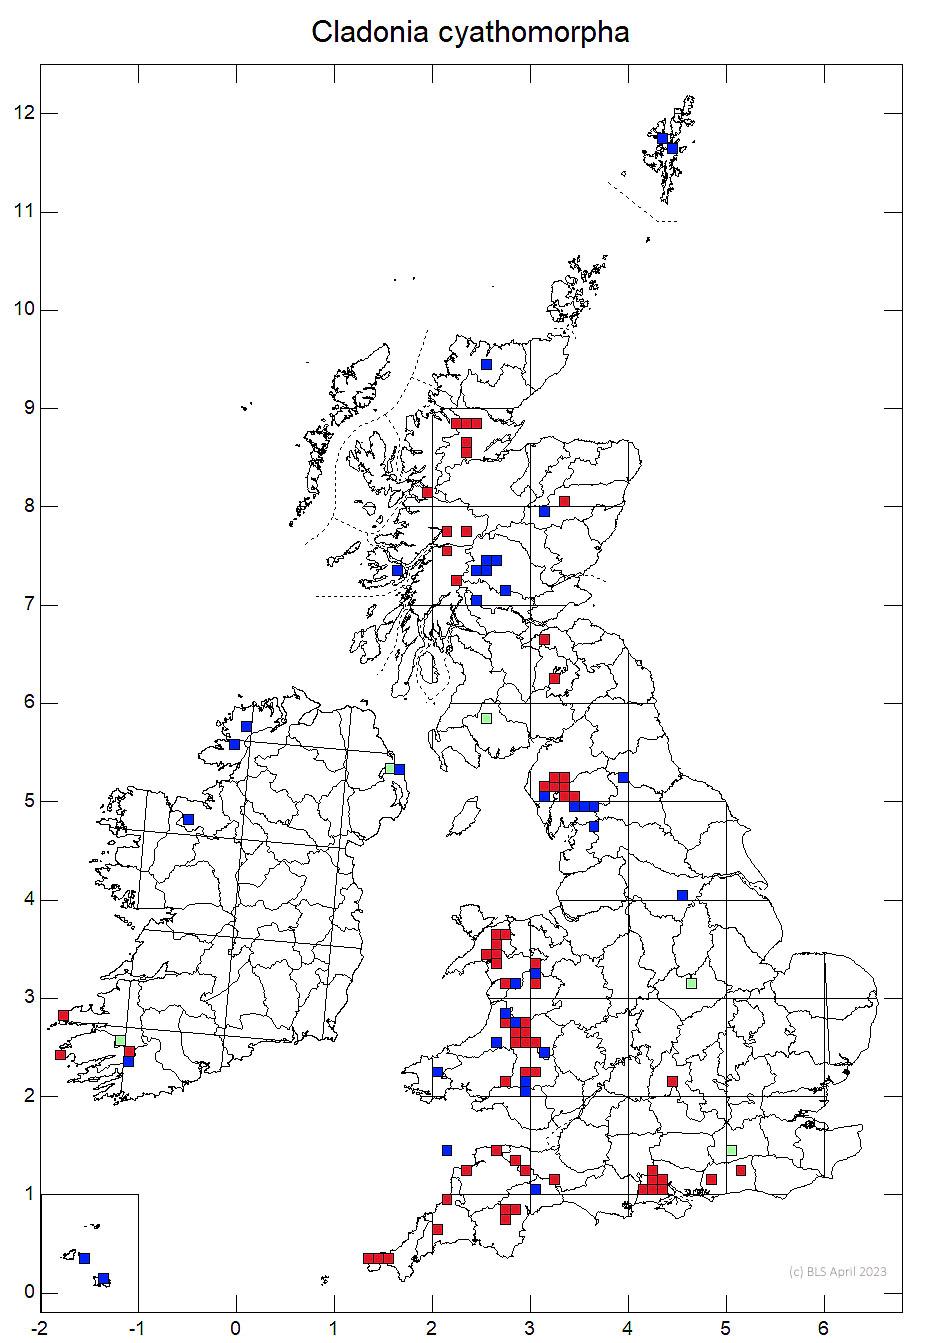 Cladonia cyathomorpha 10km sq distribution map